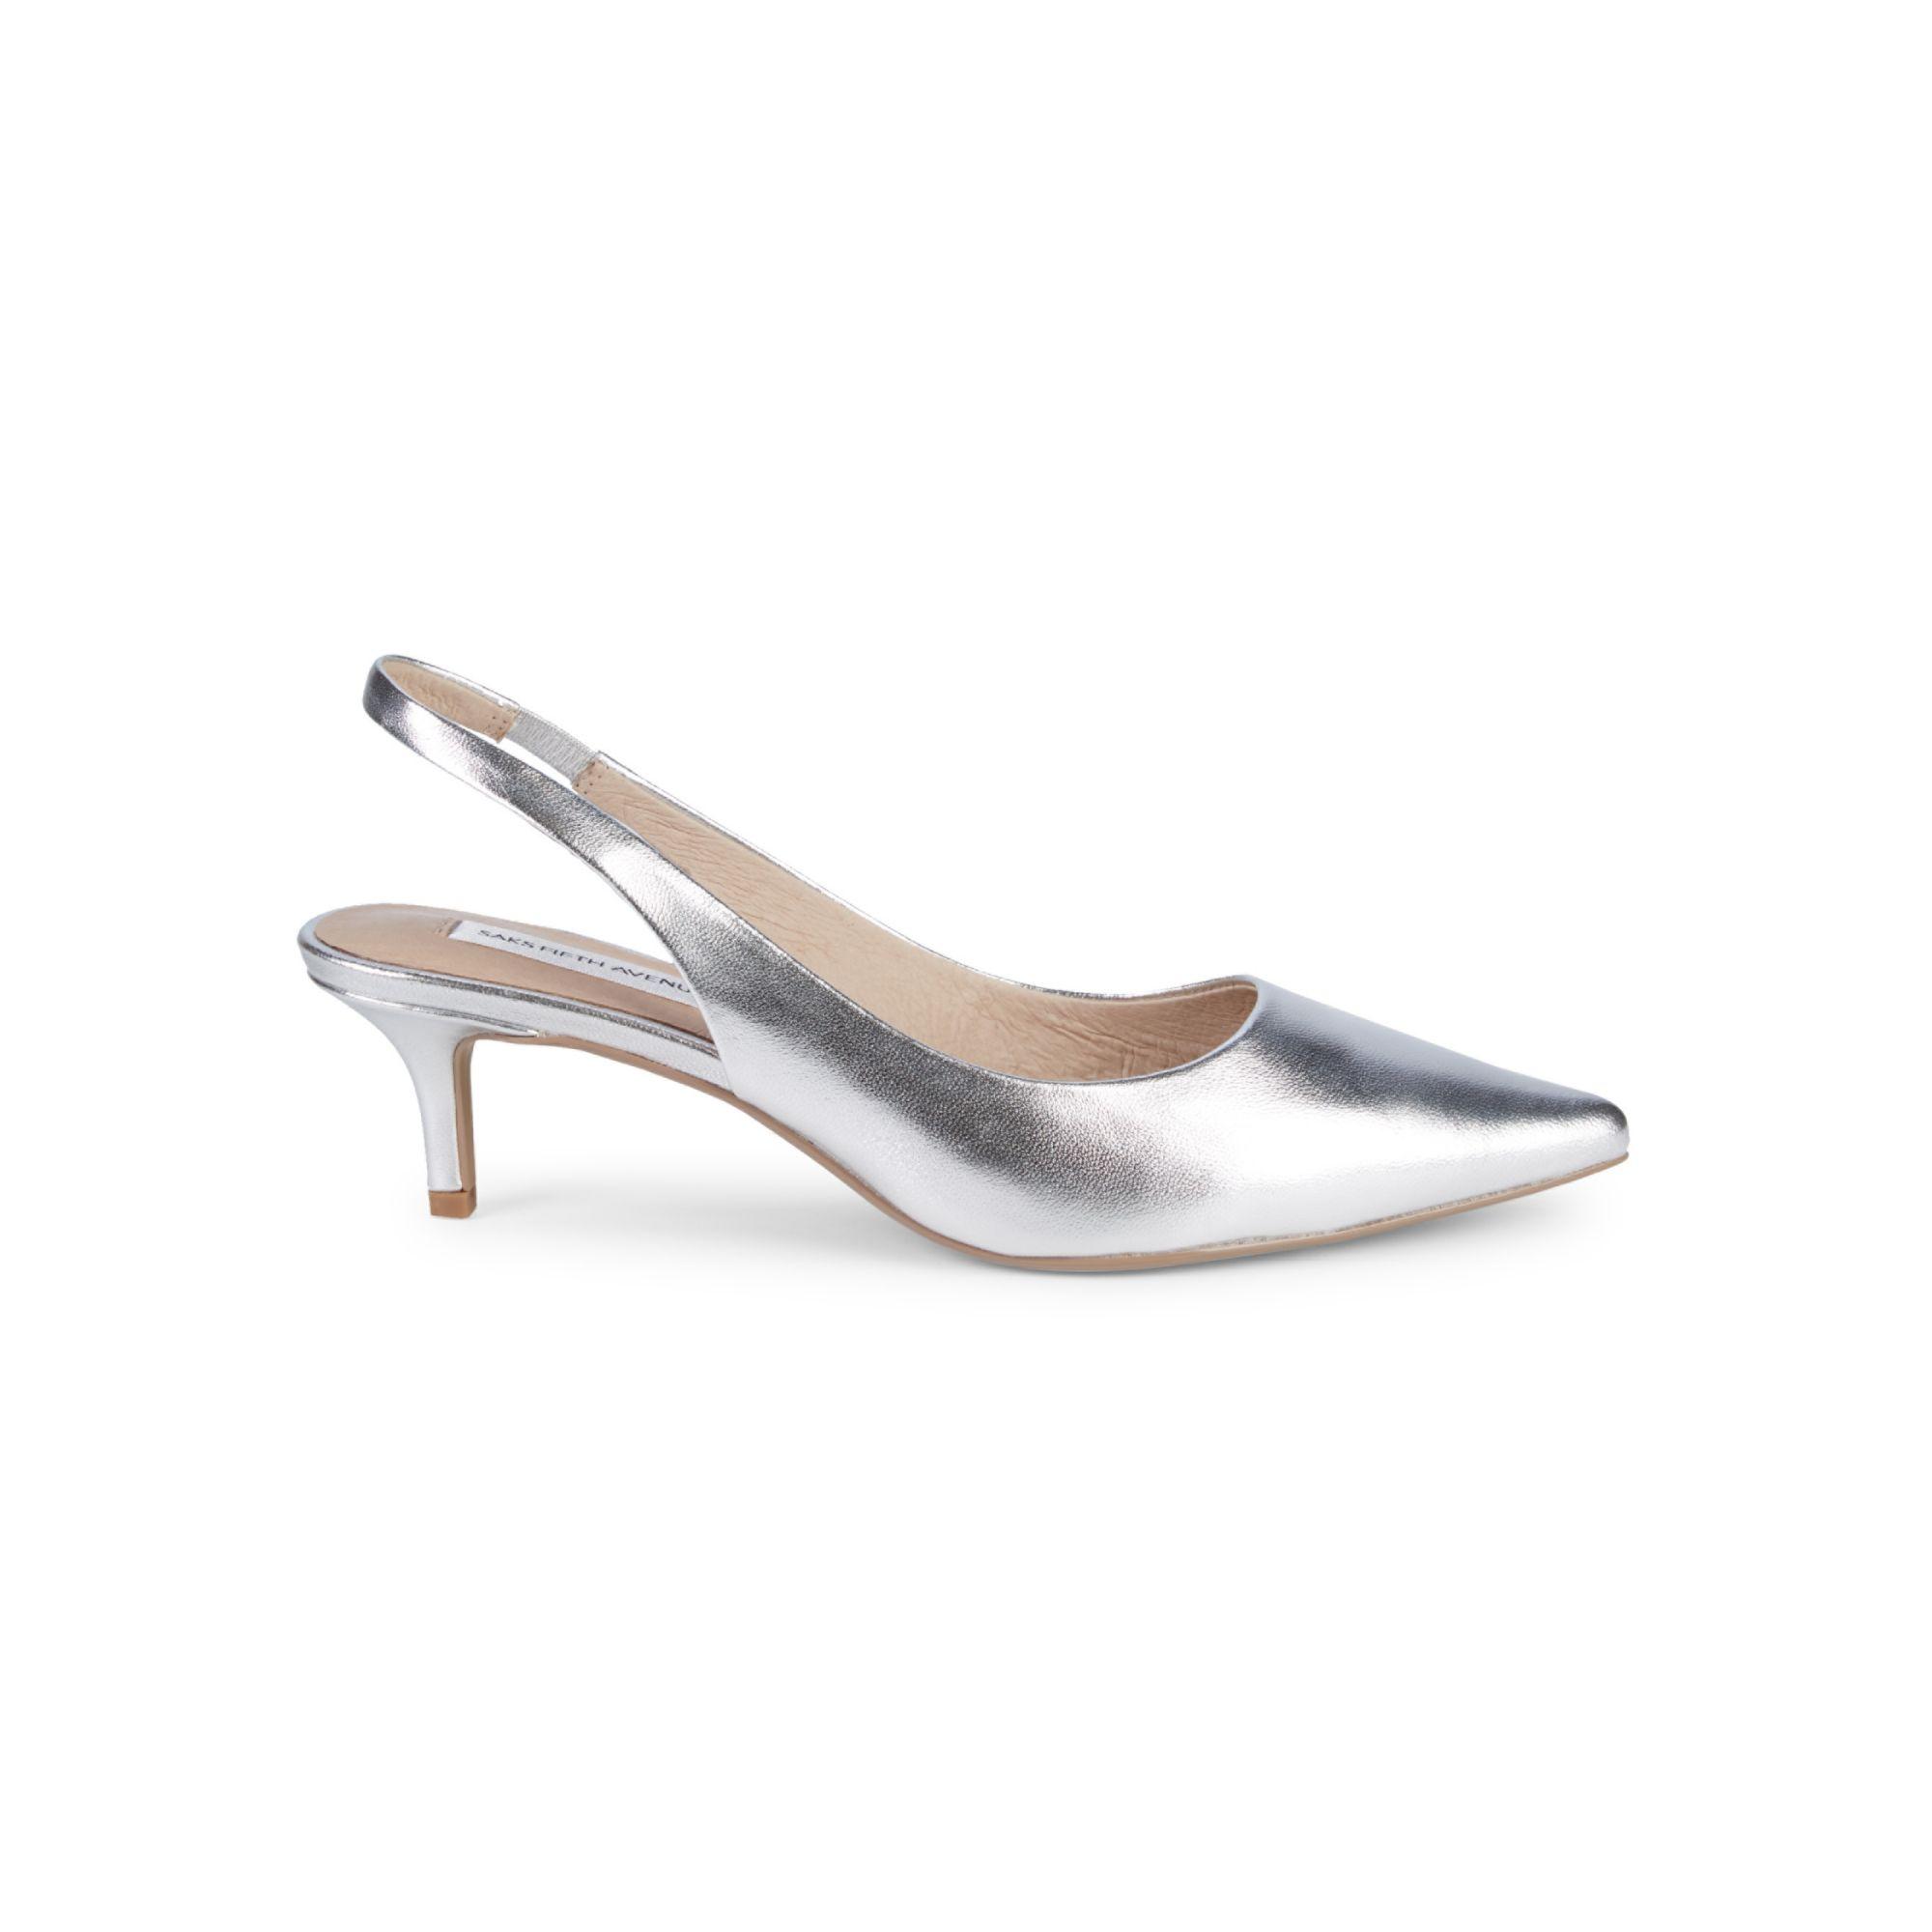 Saks Fifth Avenue Daria Leather Kitten Heel Slingback Pumps in Silver ...